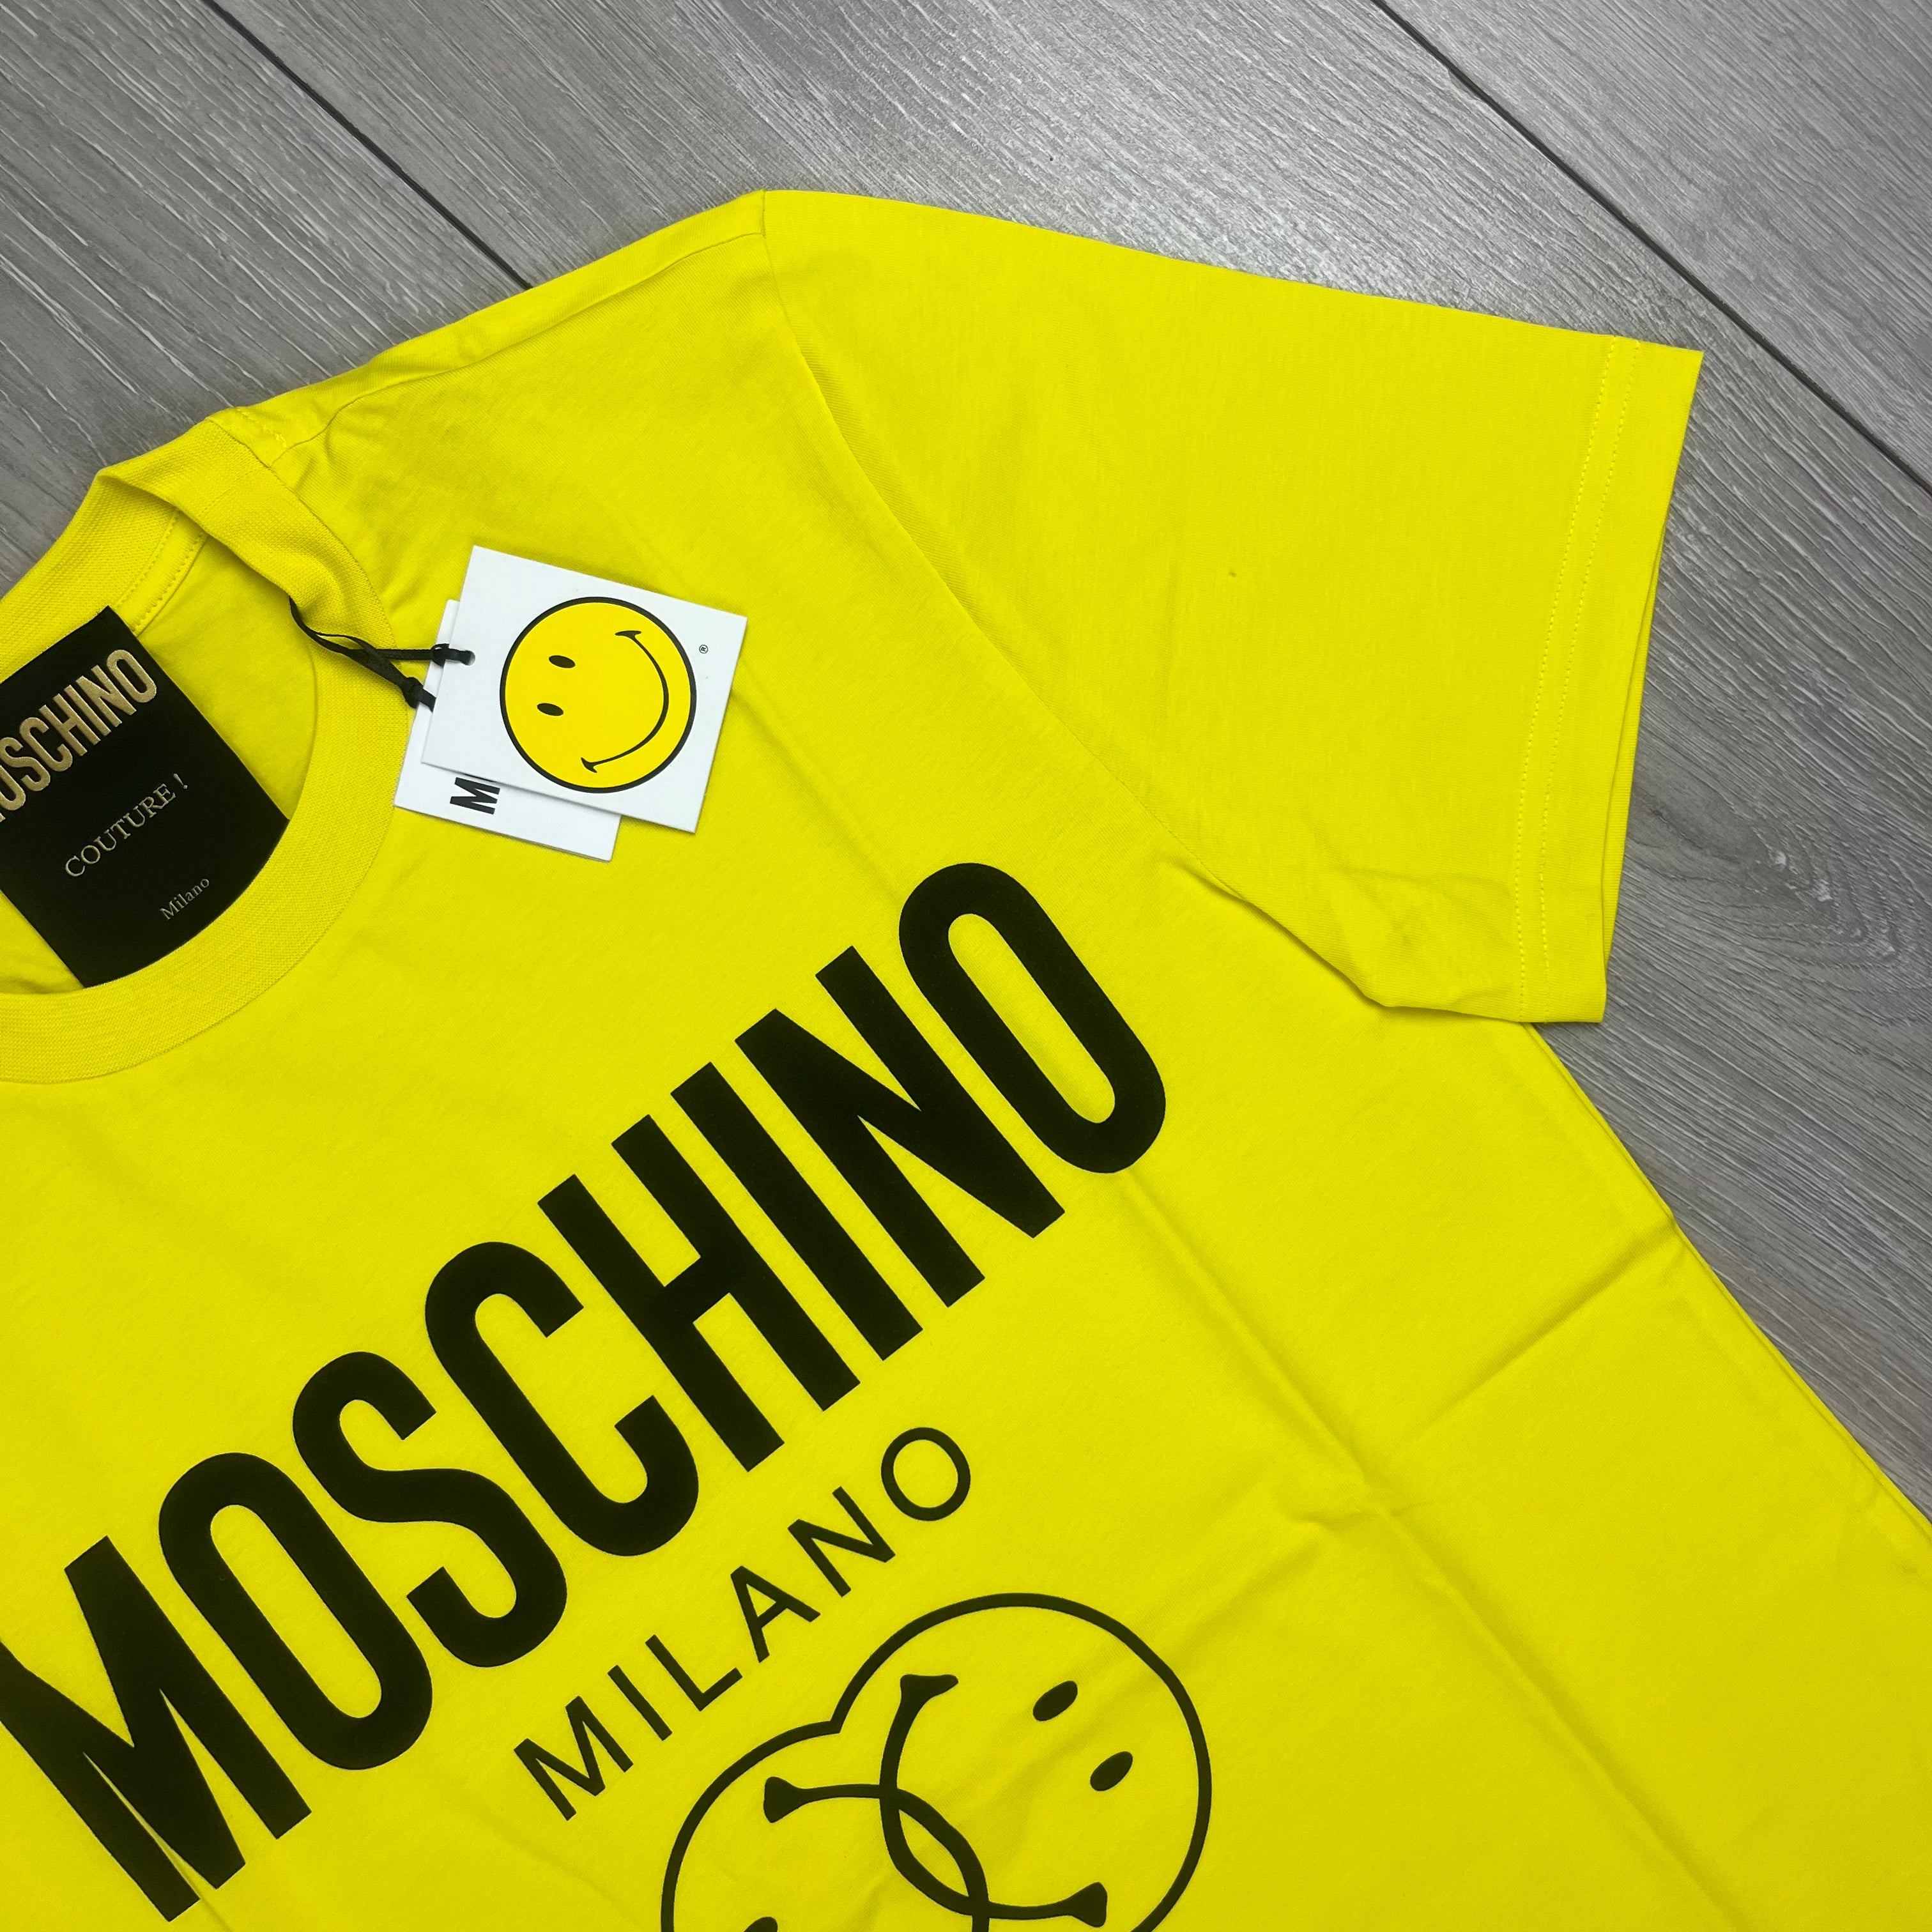 Moschino Smiley T-Shirt